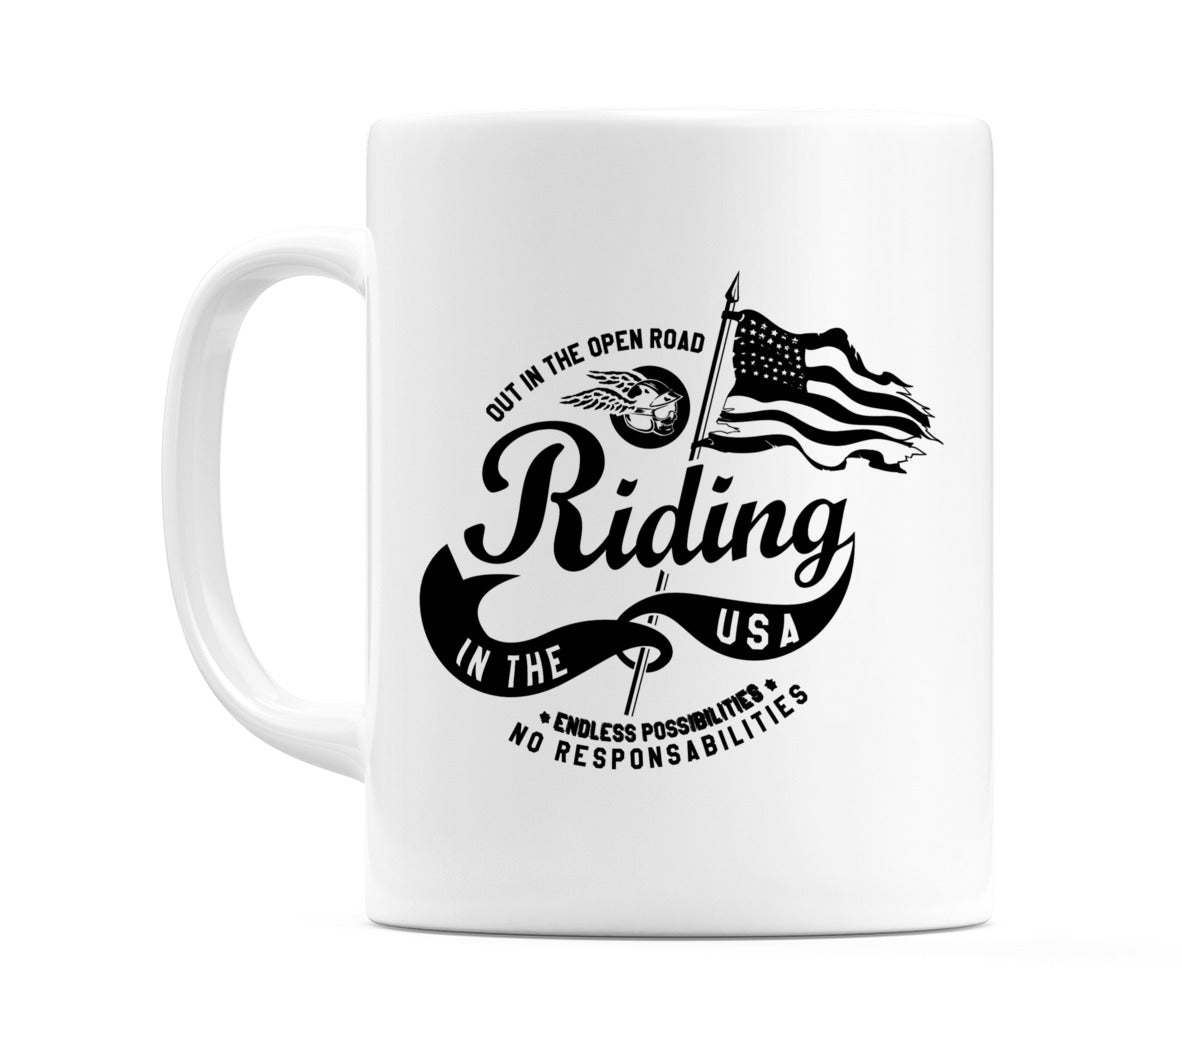 Riding in the USA Mug